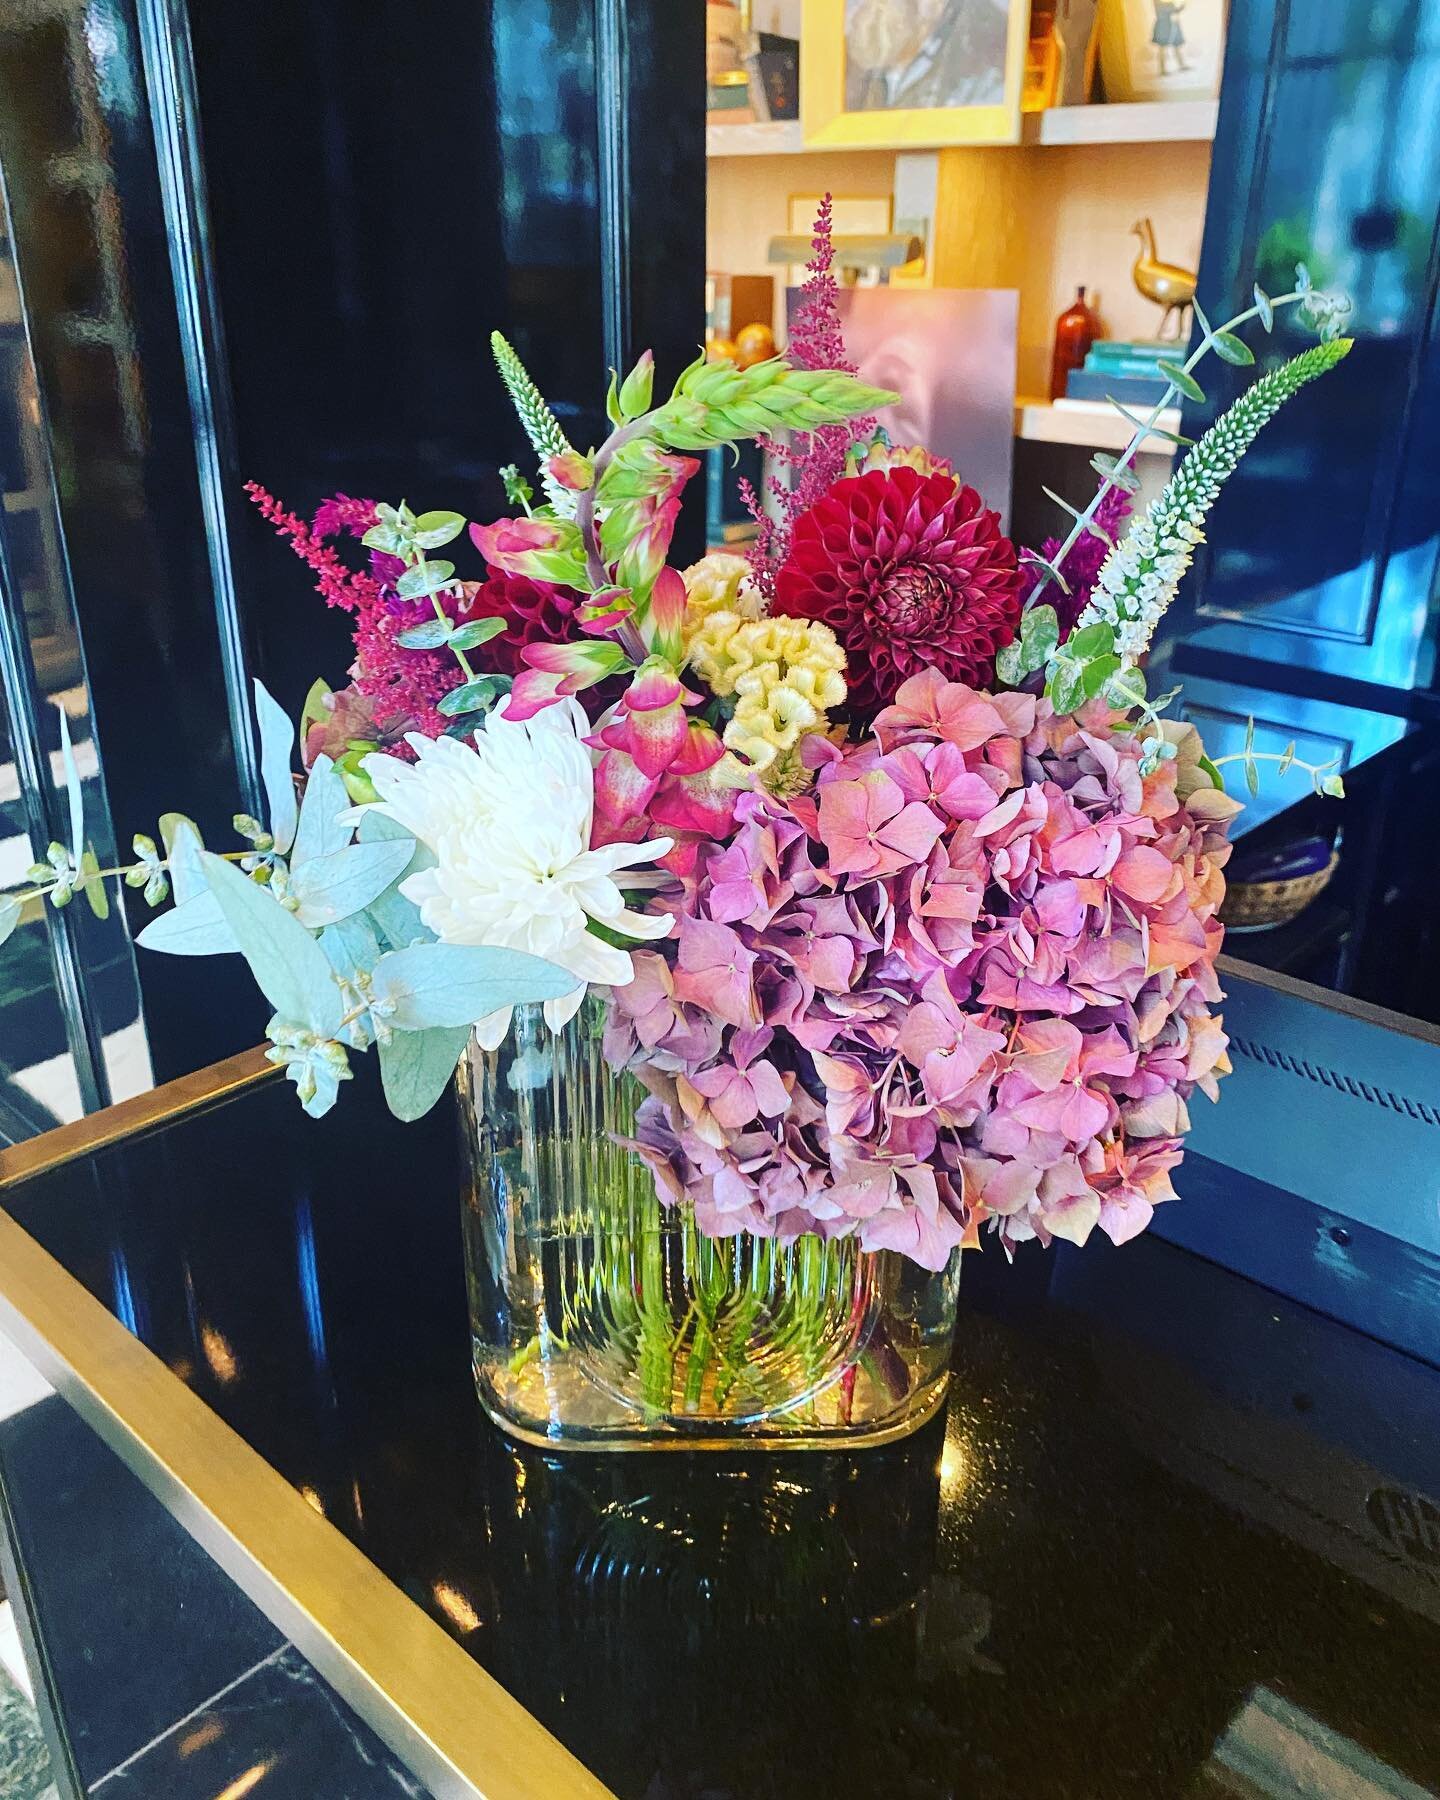 This mornings delivery in one of my favorite vases!! 
.
.
#flowerdelivery #bayareaflorist #floraldesign #weddingdesigner #bayareabride #bridetobe #summerflowers  #hydrangeas #hydrangea